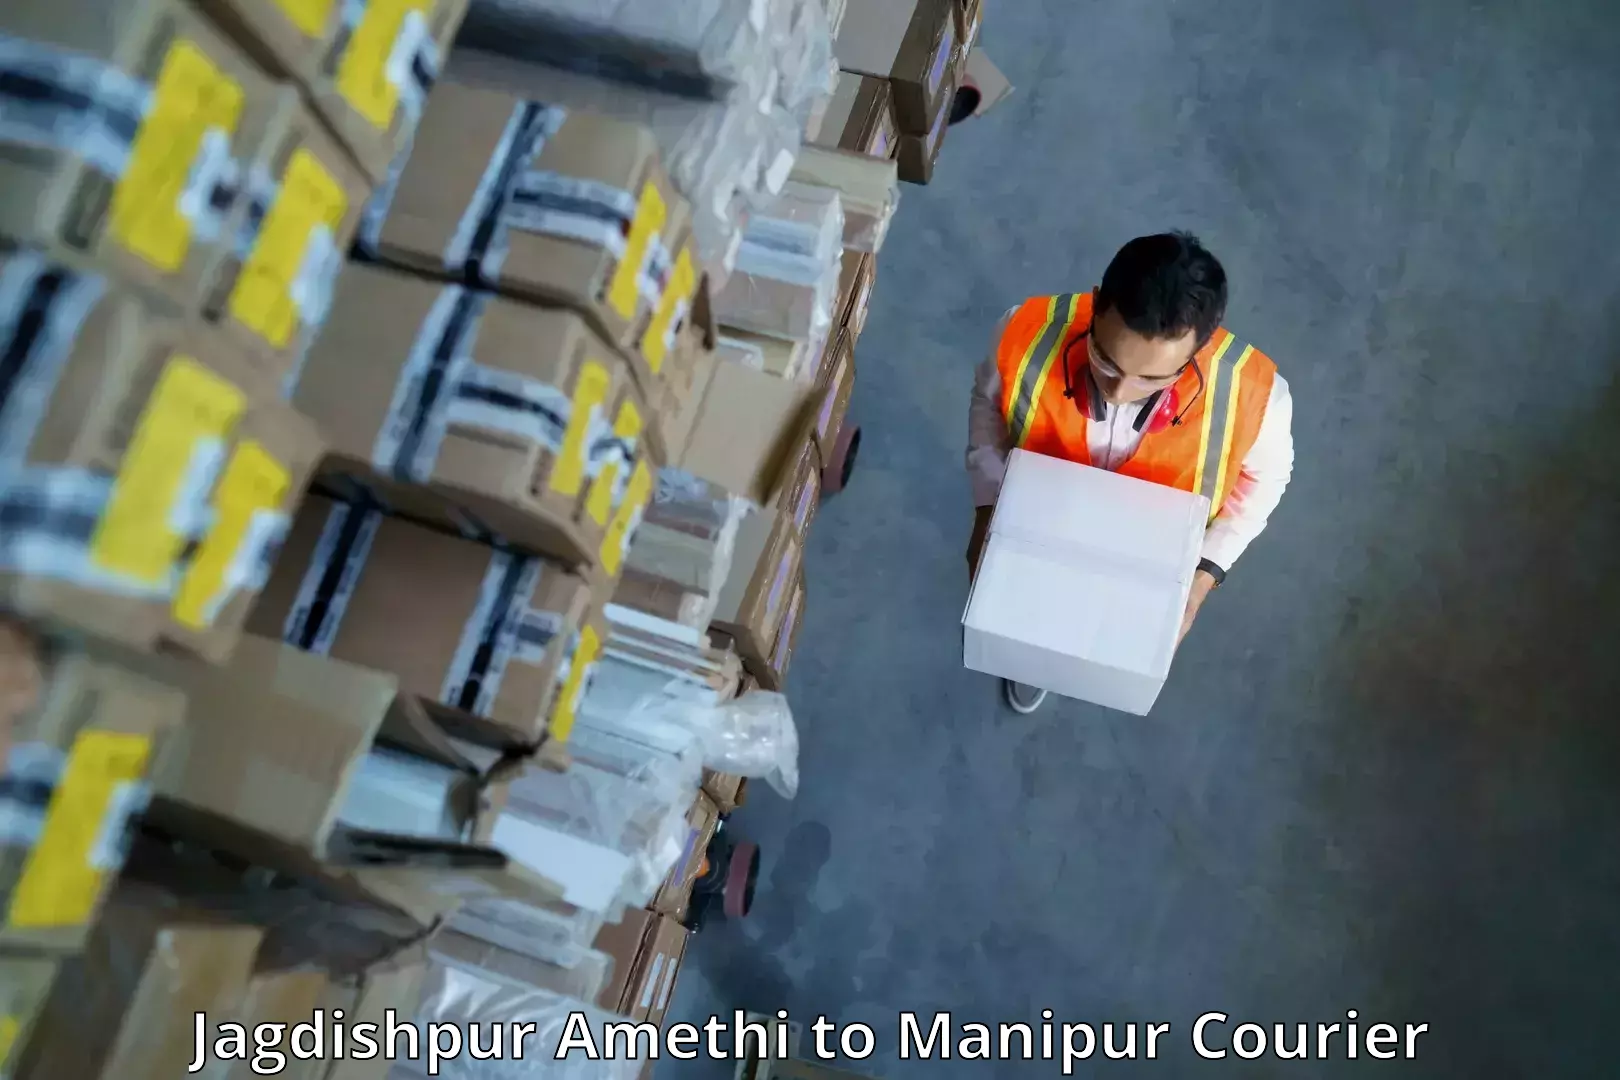 Express delivery solutions Jagdishpur Amethi to Churachandpur